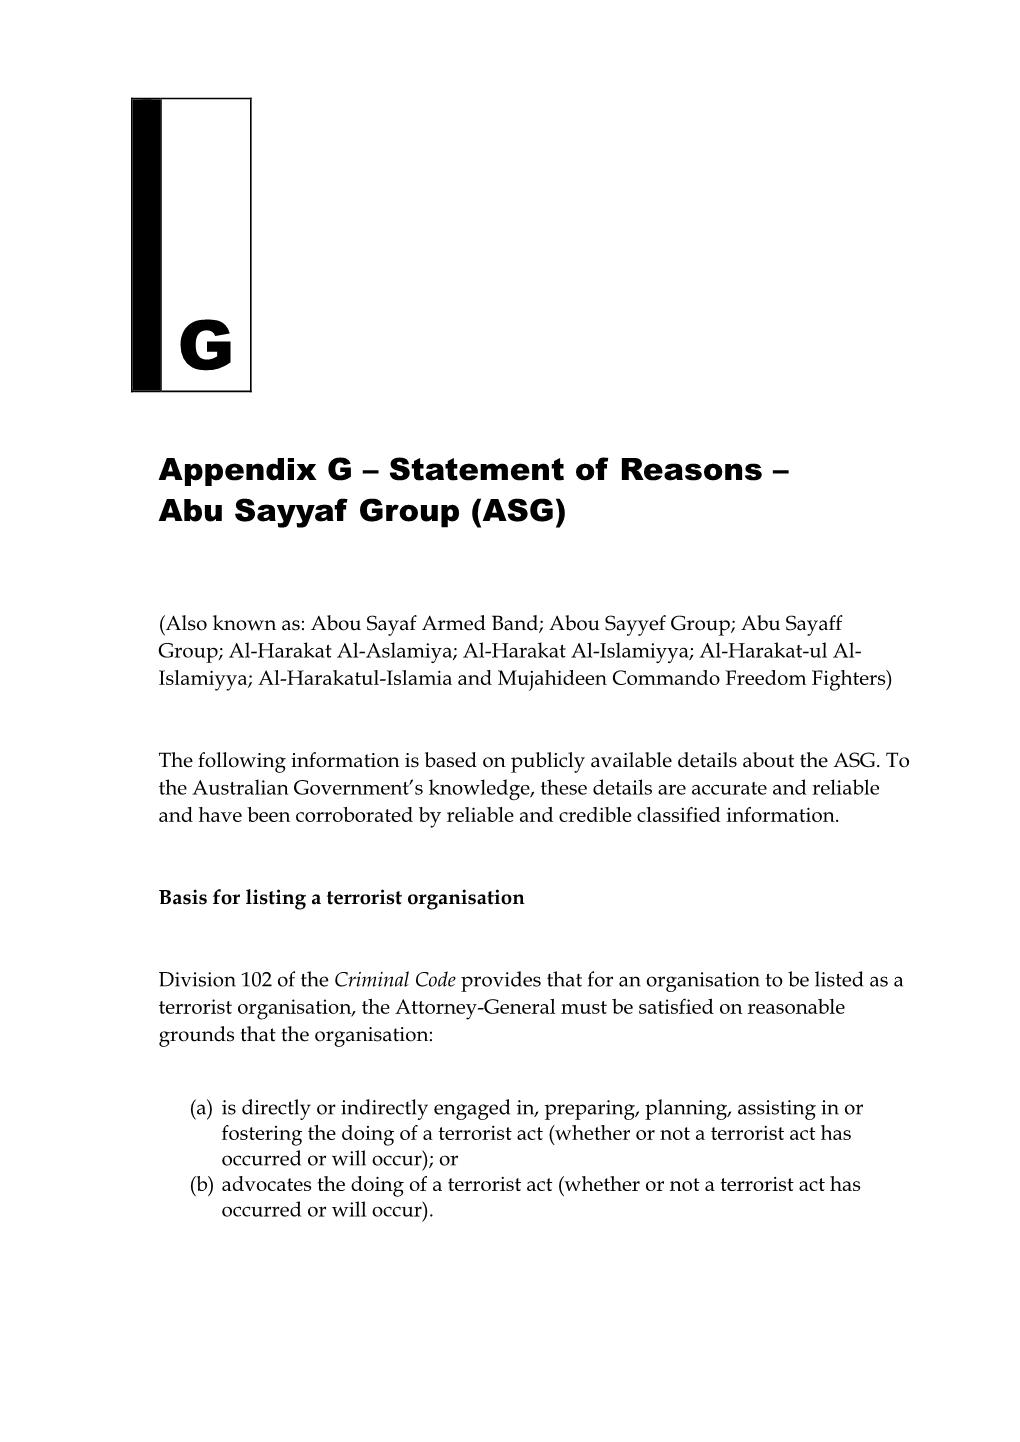 Appendix G – Statement of Reasons – Abu Sayyaf Group (ASG)